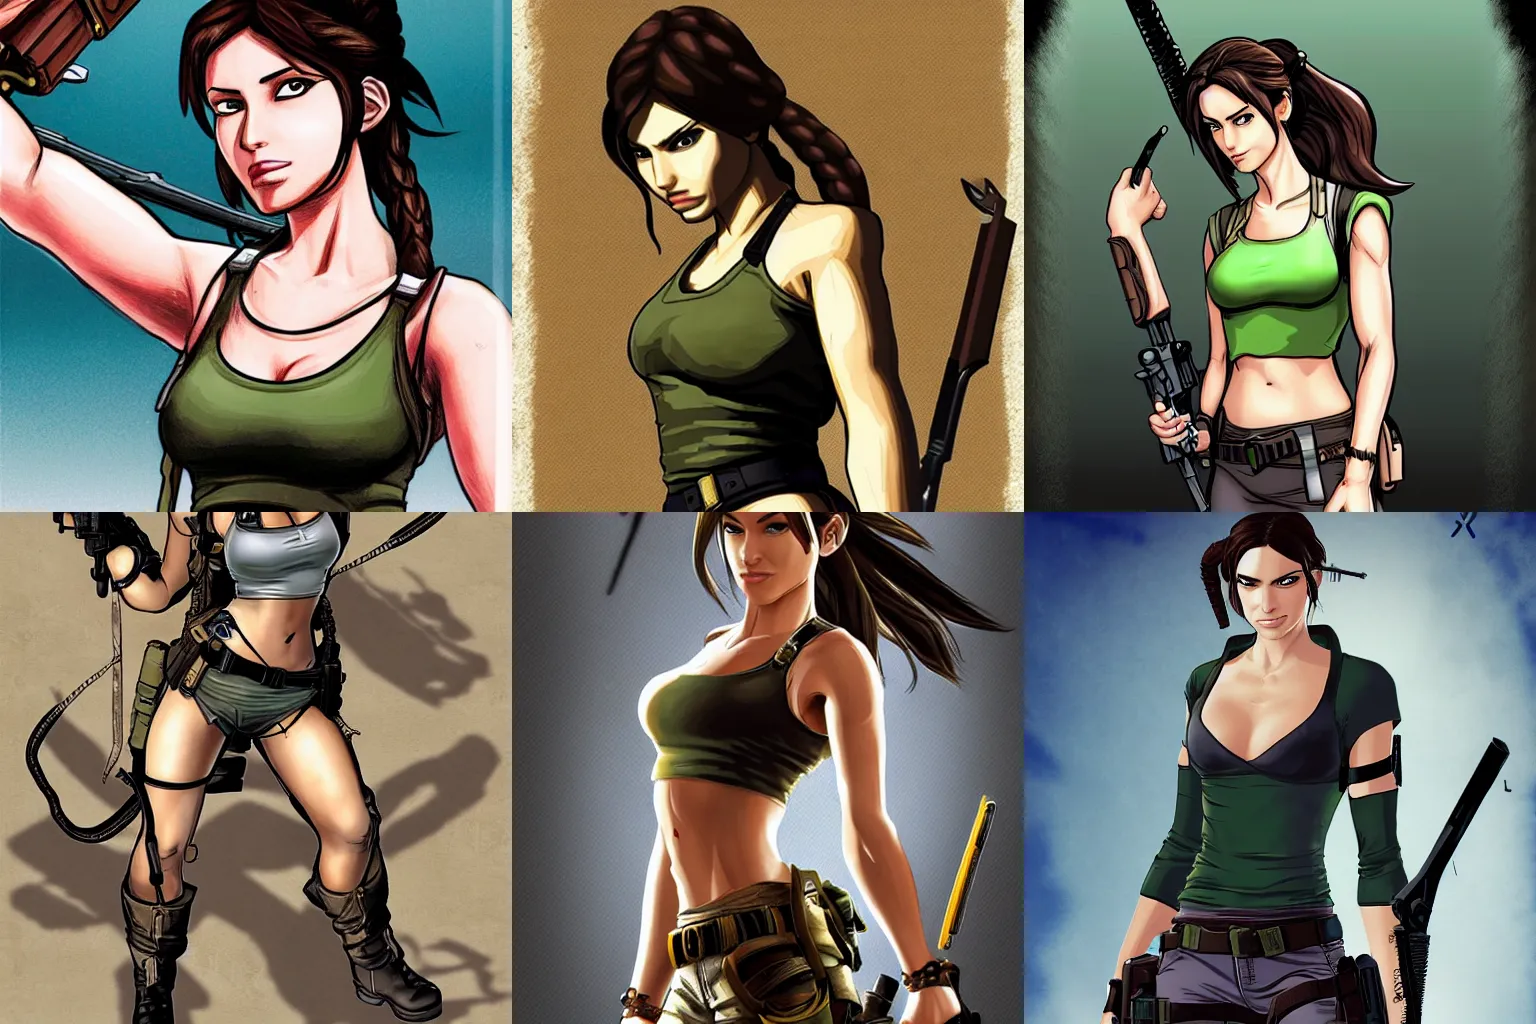 Prompt: Lara Croft in the style of Hirohiko Araki